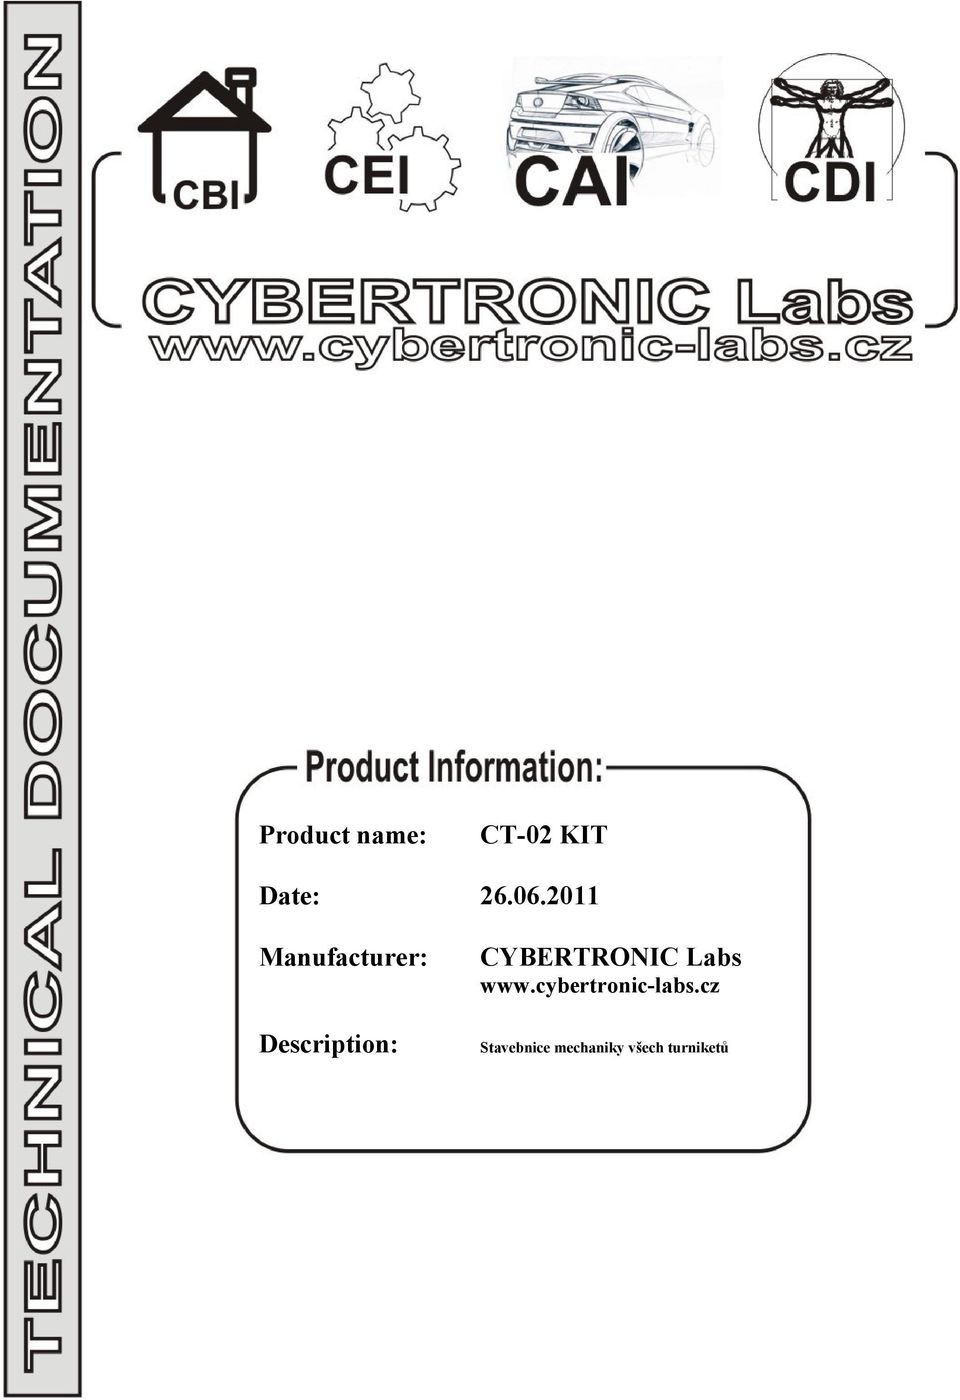 CYBERTRONIC Labs www.